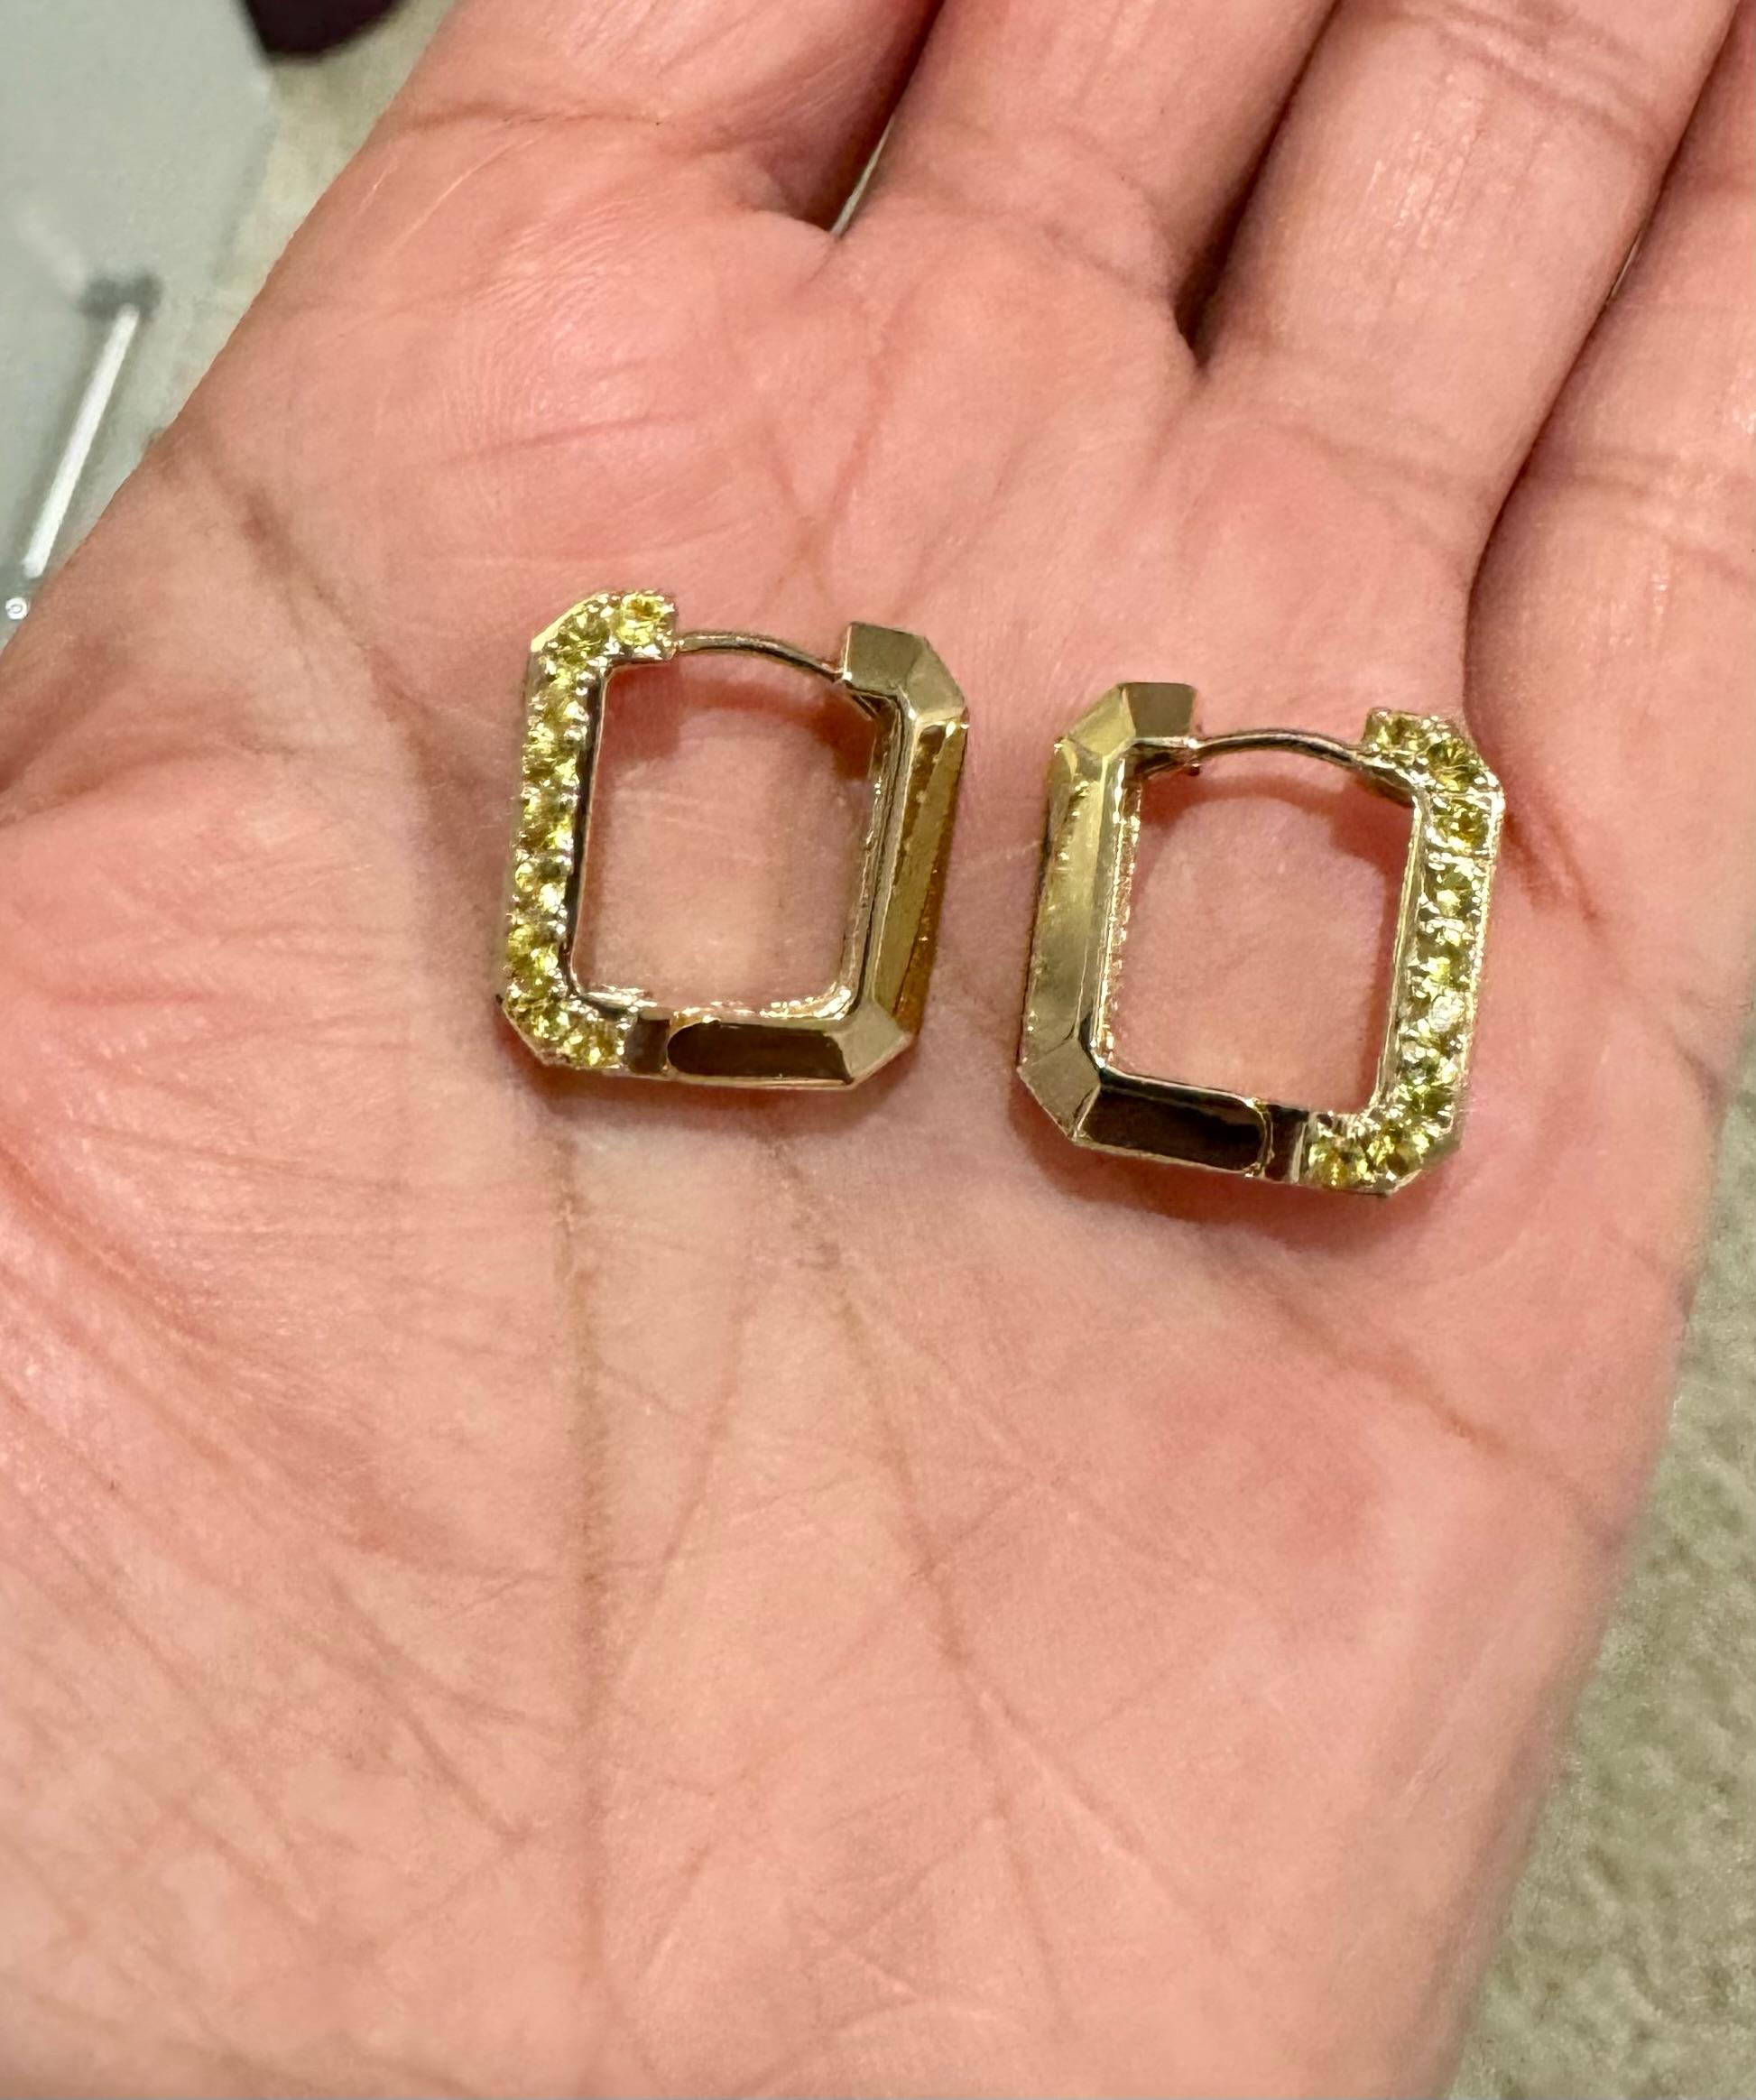 1.16 Carat Diamond Yellow Sapphire Gold Hoop Earrings